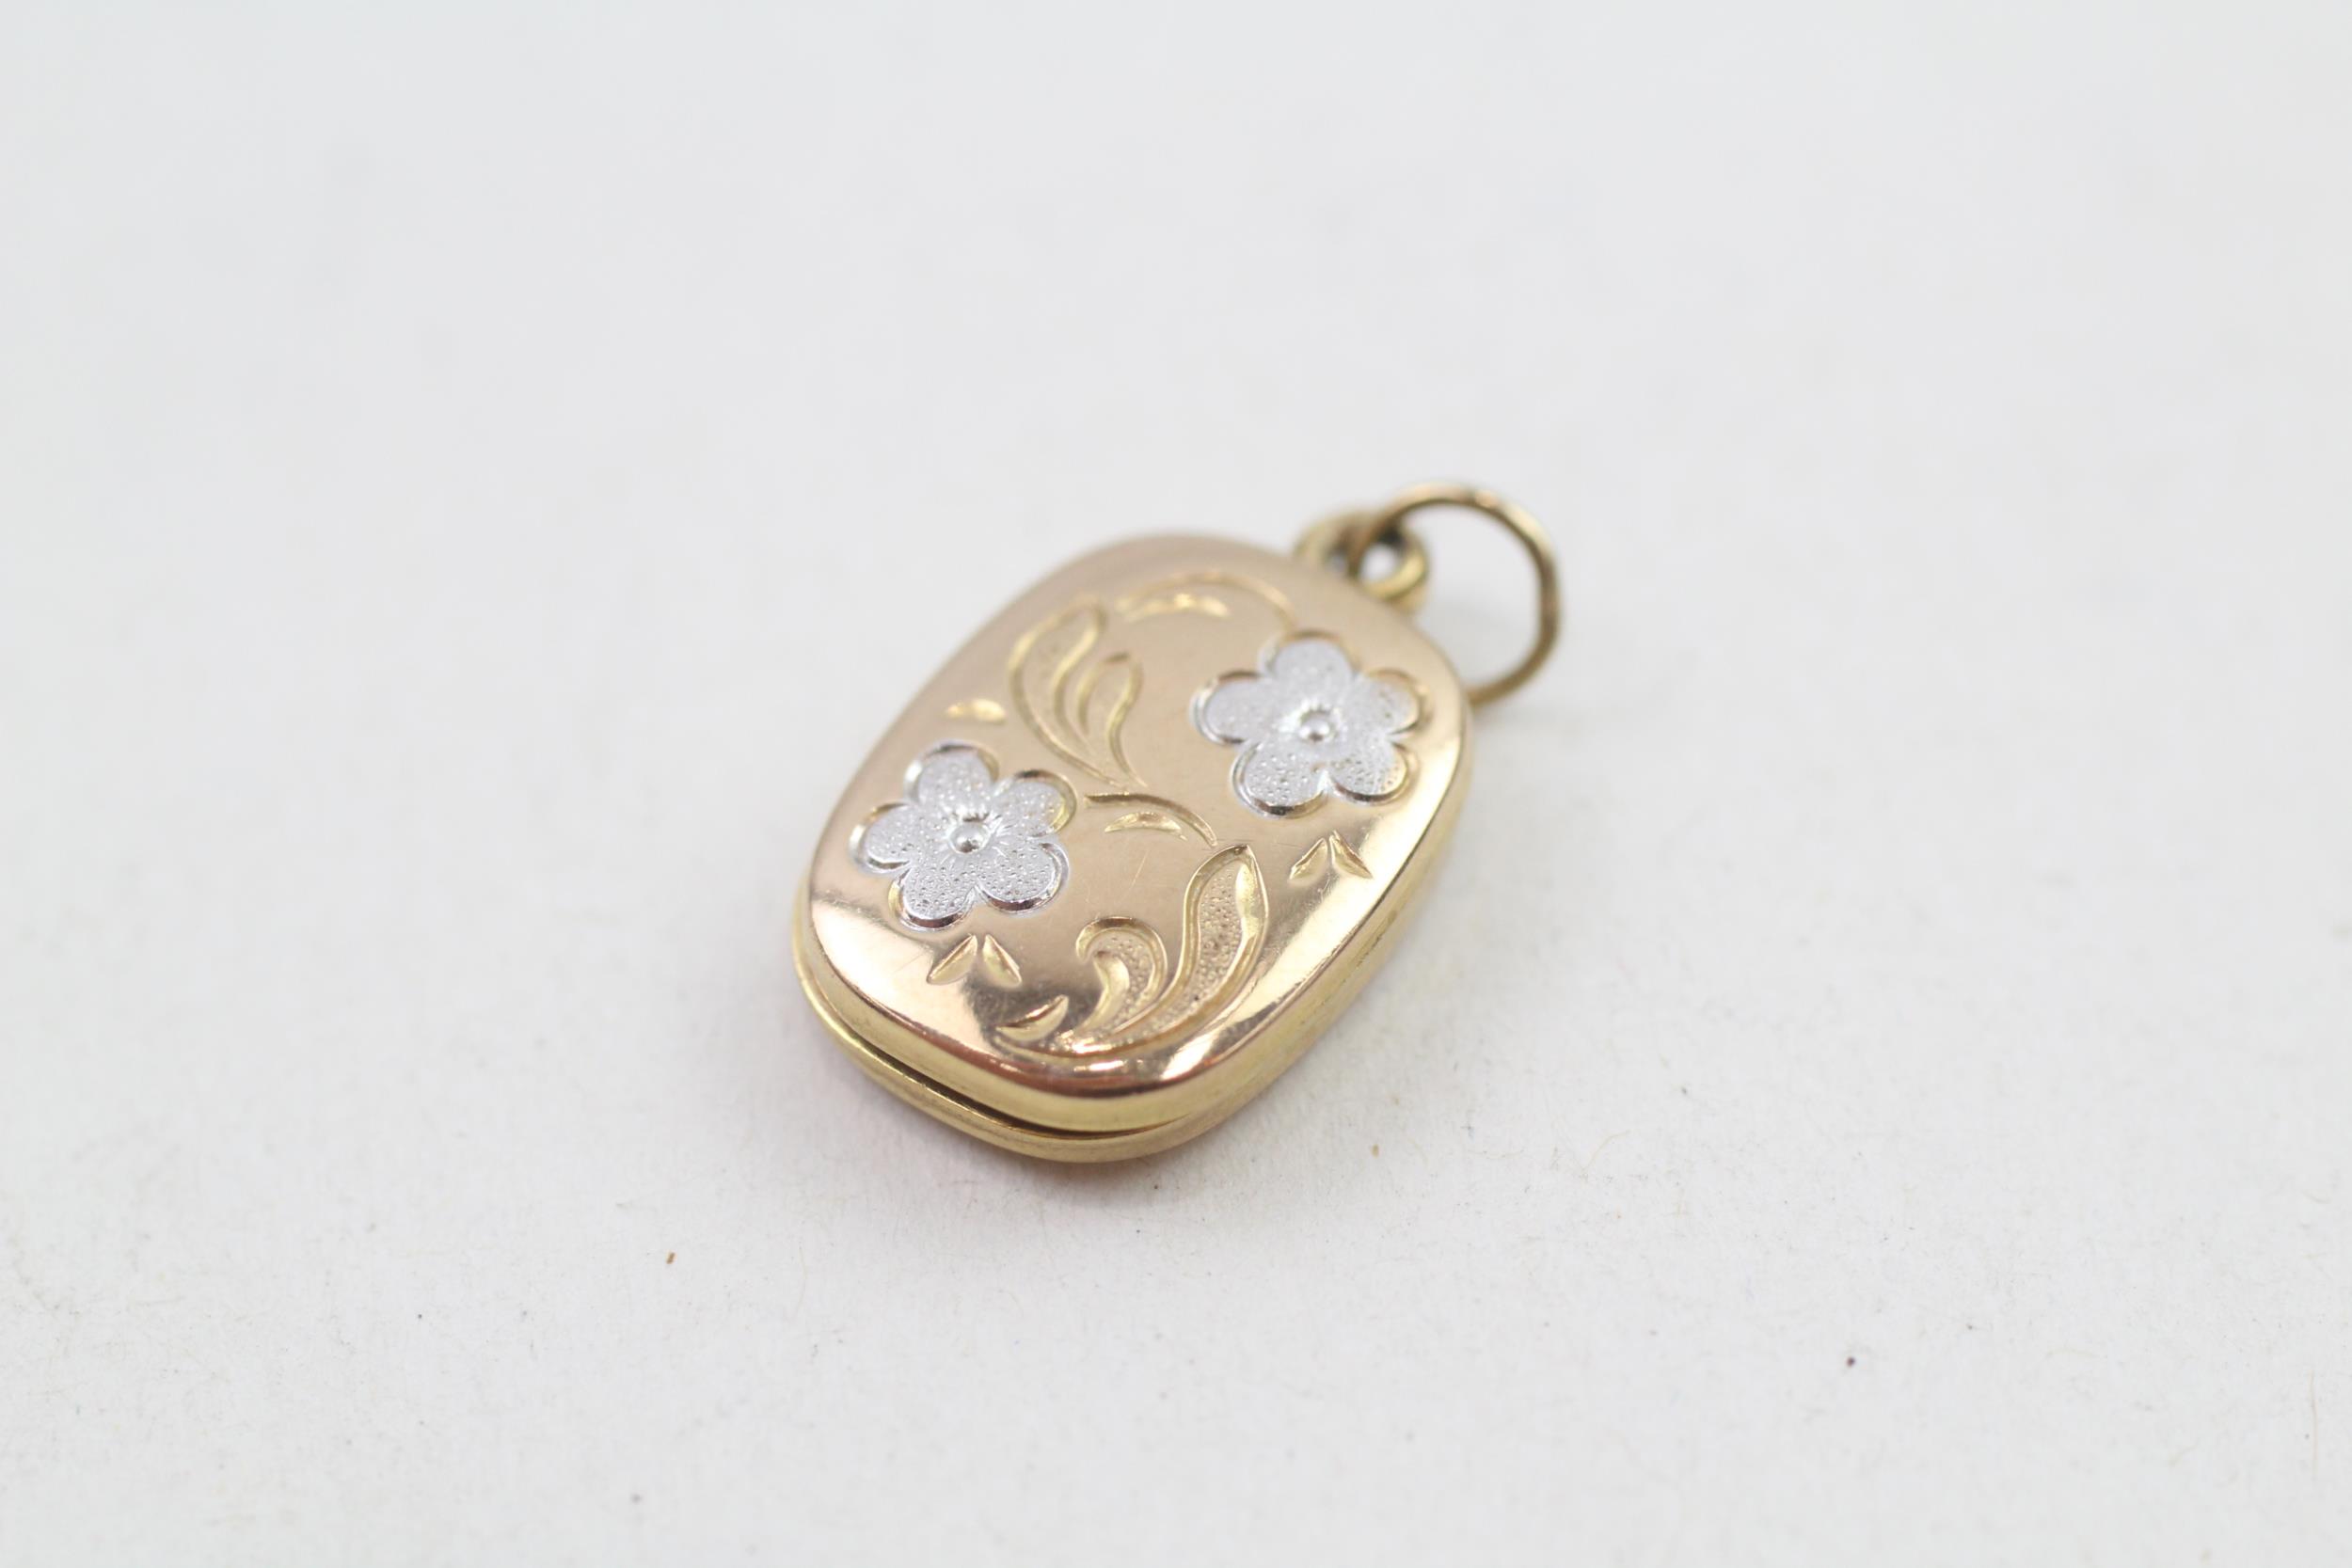 9ct gold miniture floral patterned locket (1g)